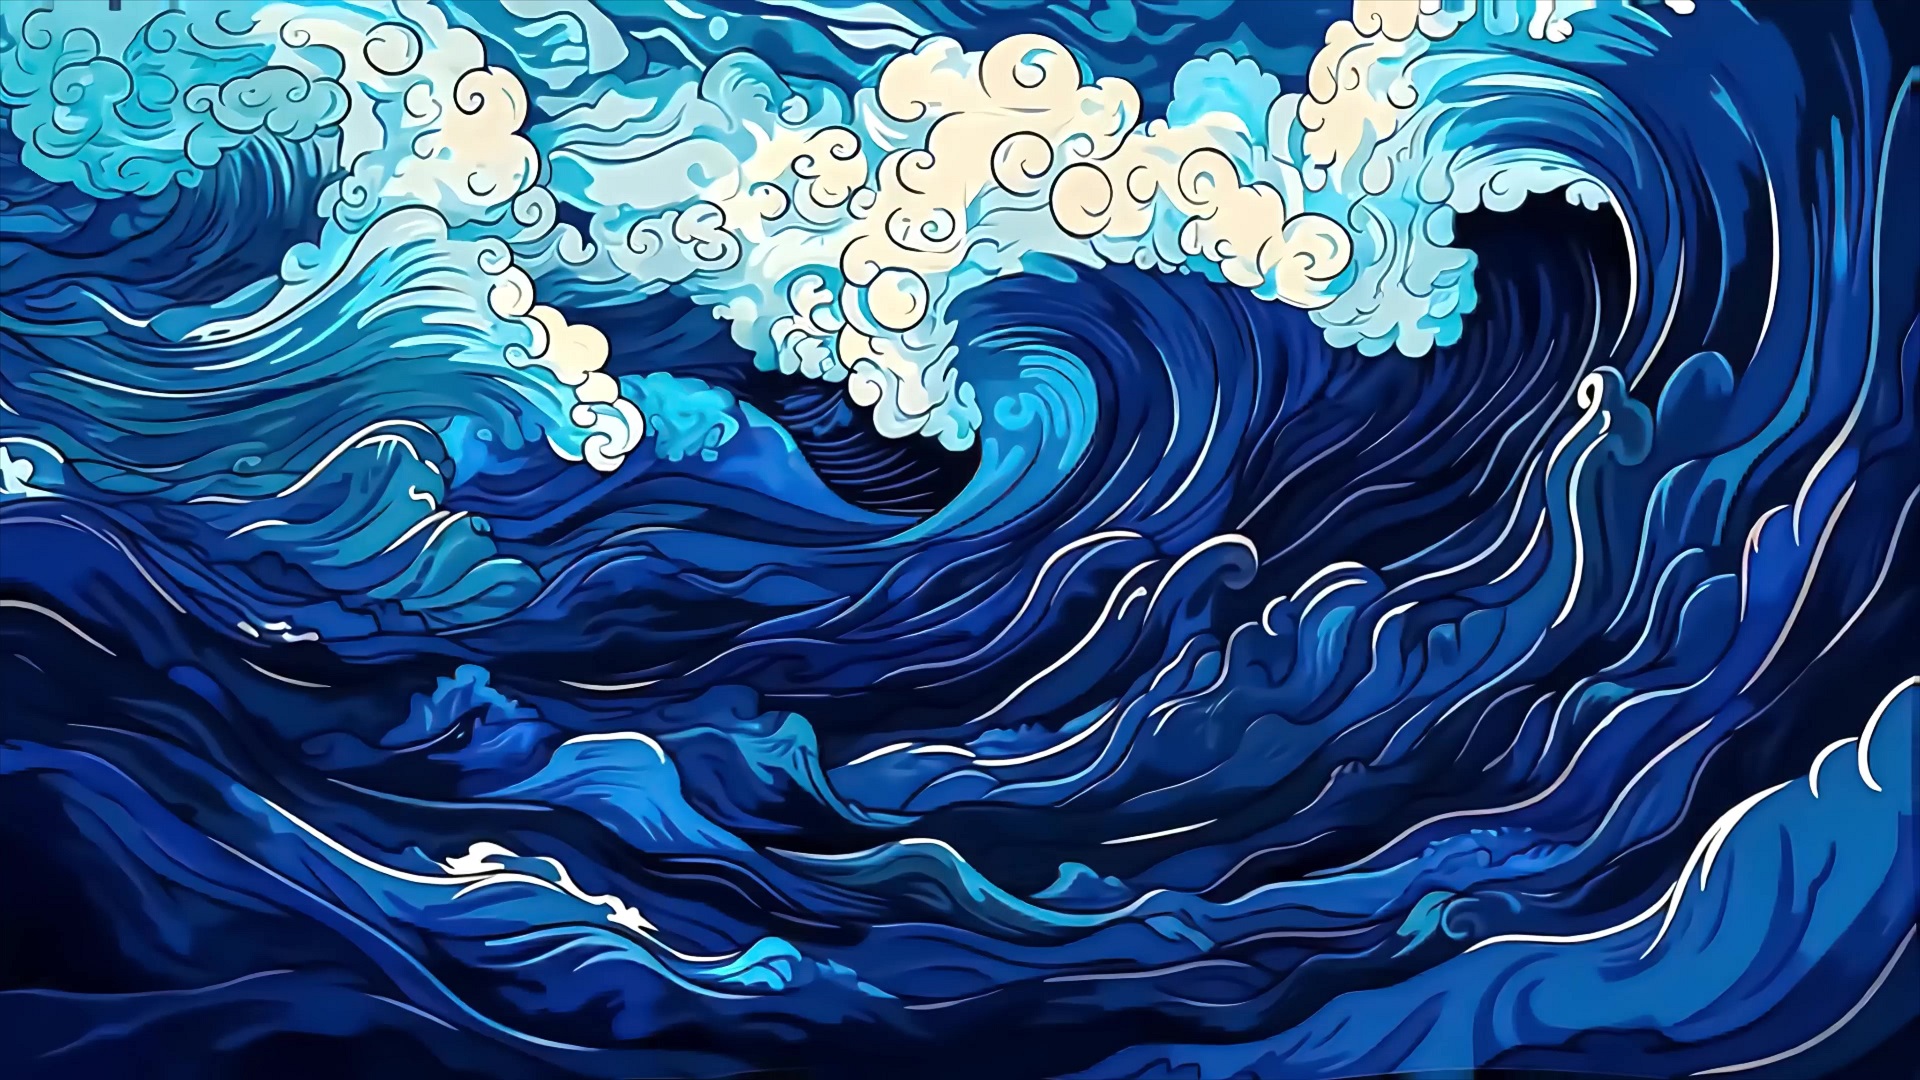 Abstract Ocean Waves Live Wallpaper - MoeWalls